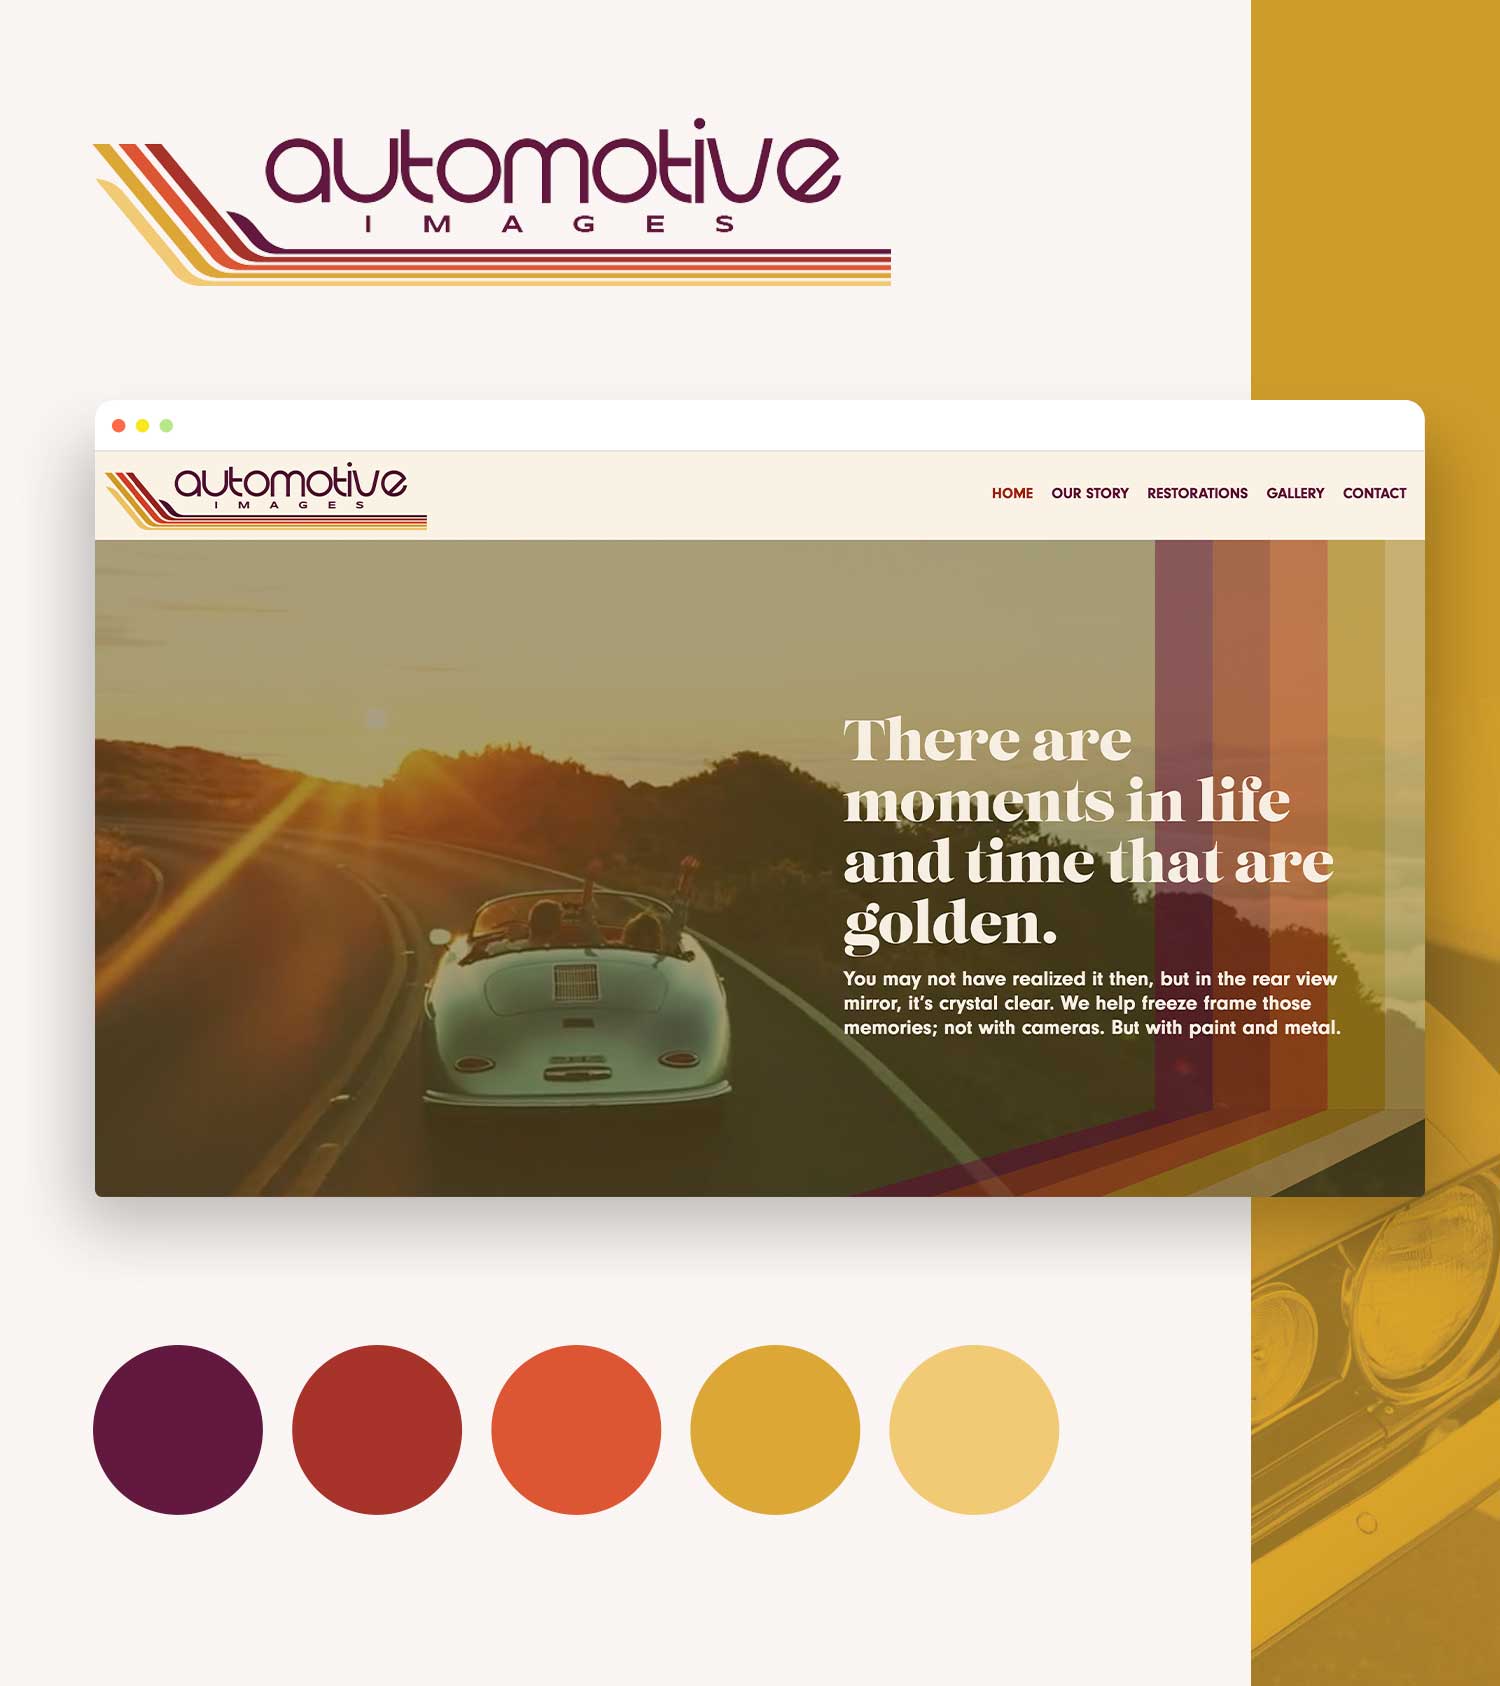 Automotive Images Website and Logo Design